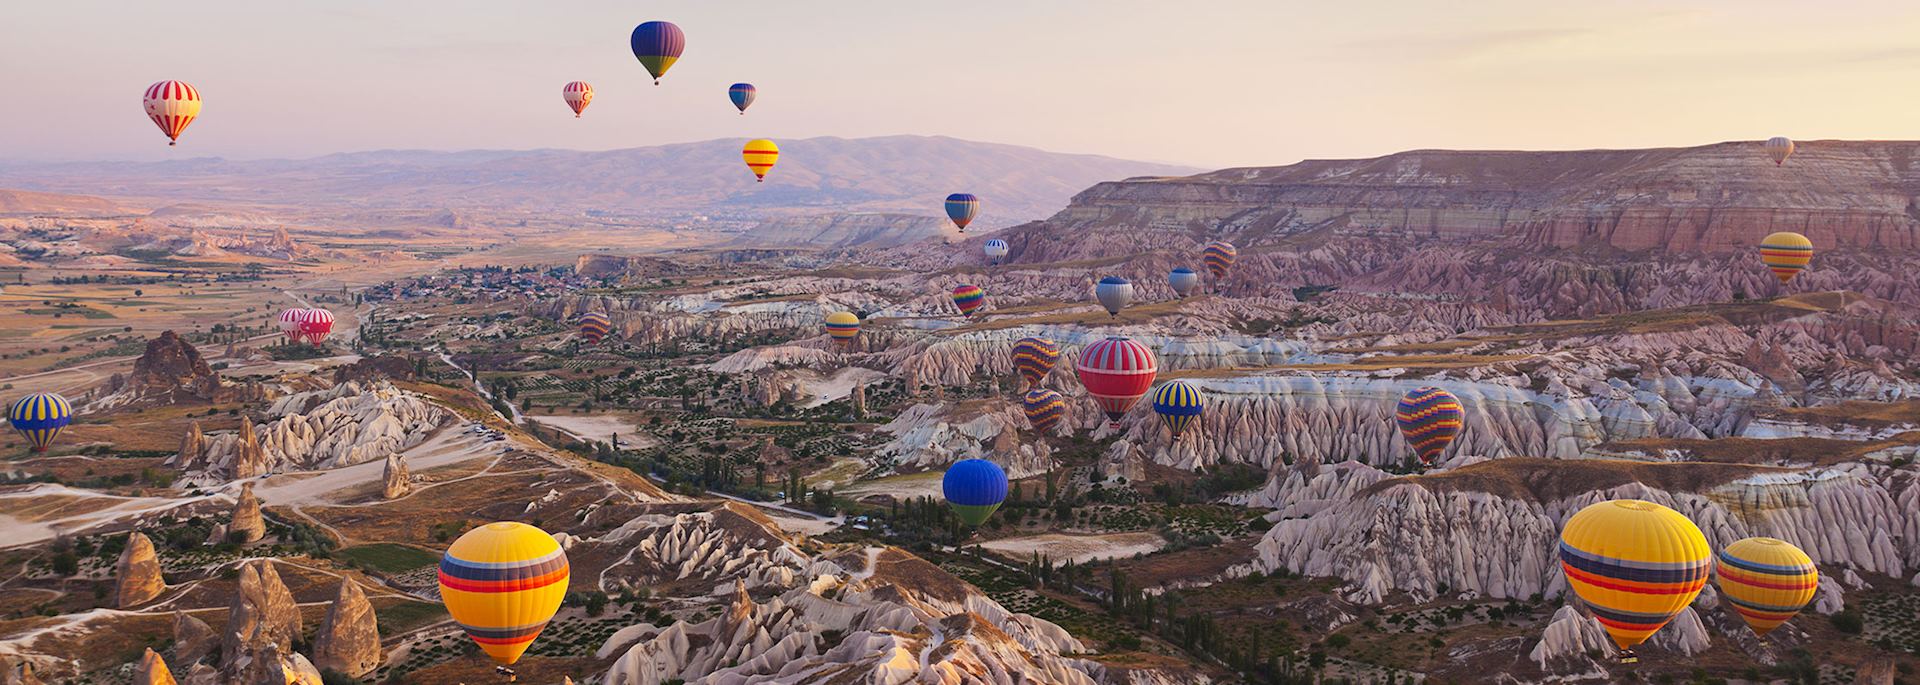 Hot air balloons floating over Cappadocia